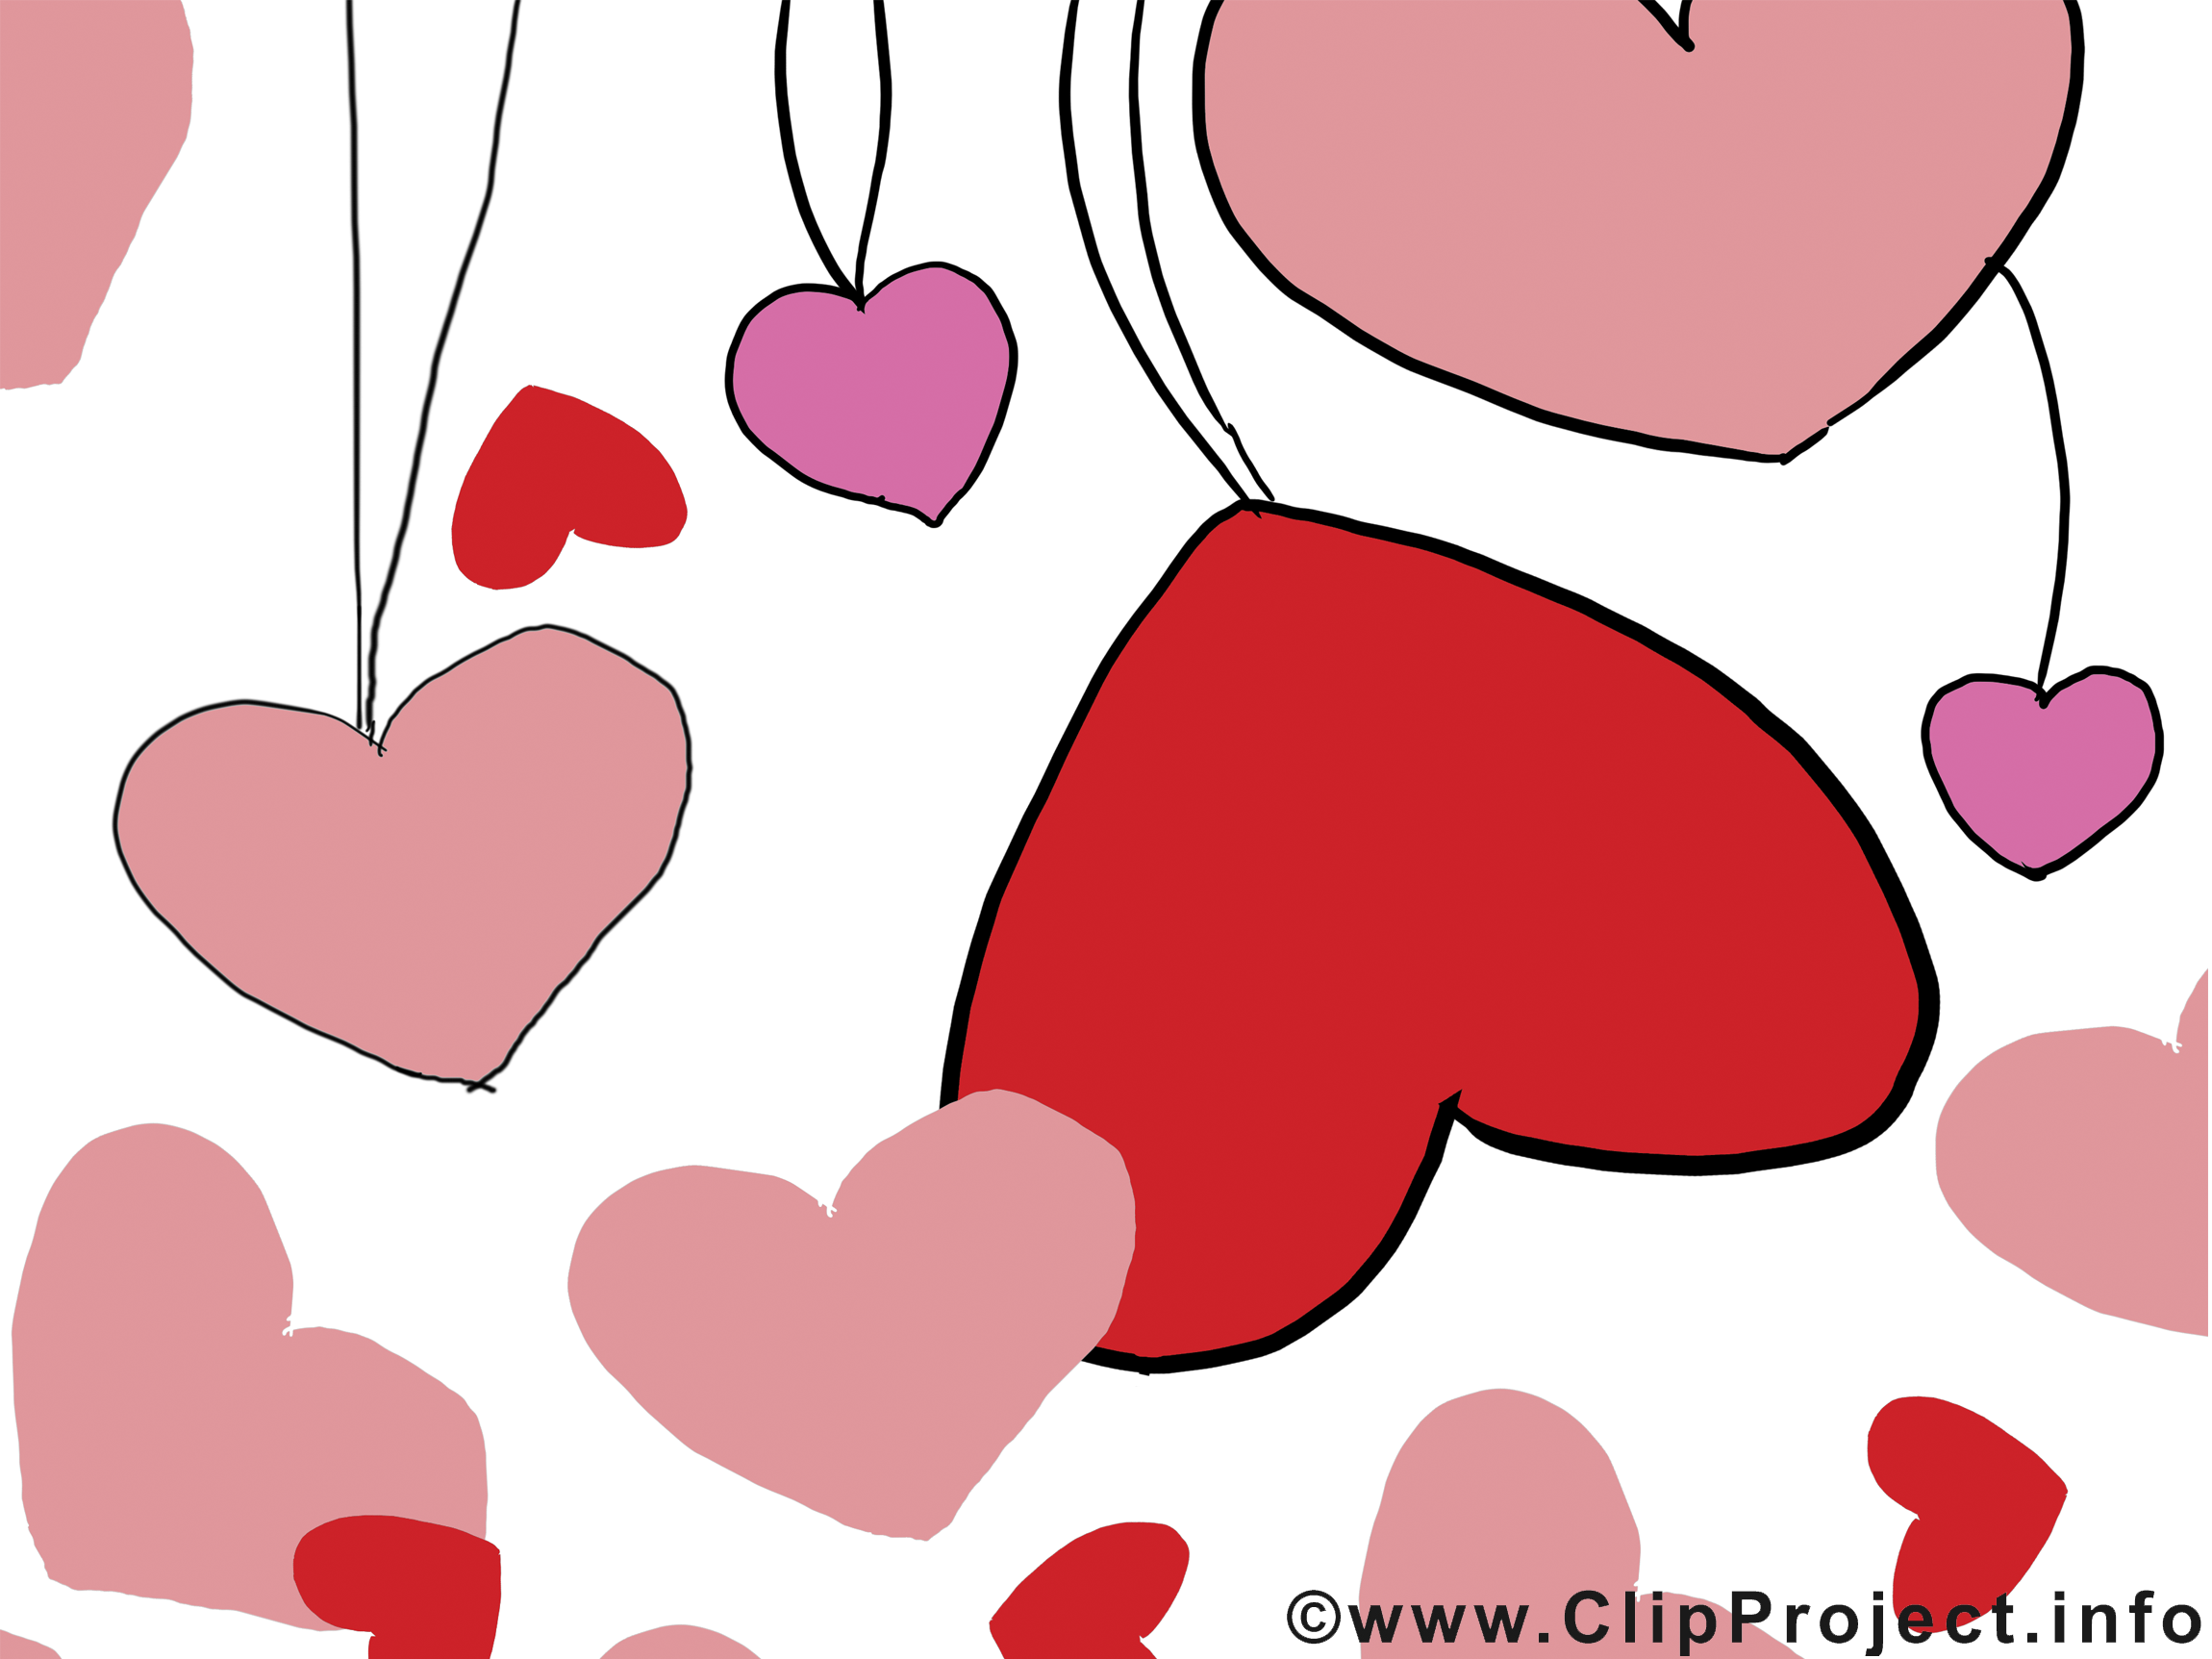 Coeurs illustration - Saint-Valentin carte gratuite